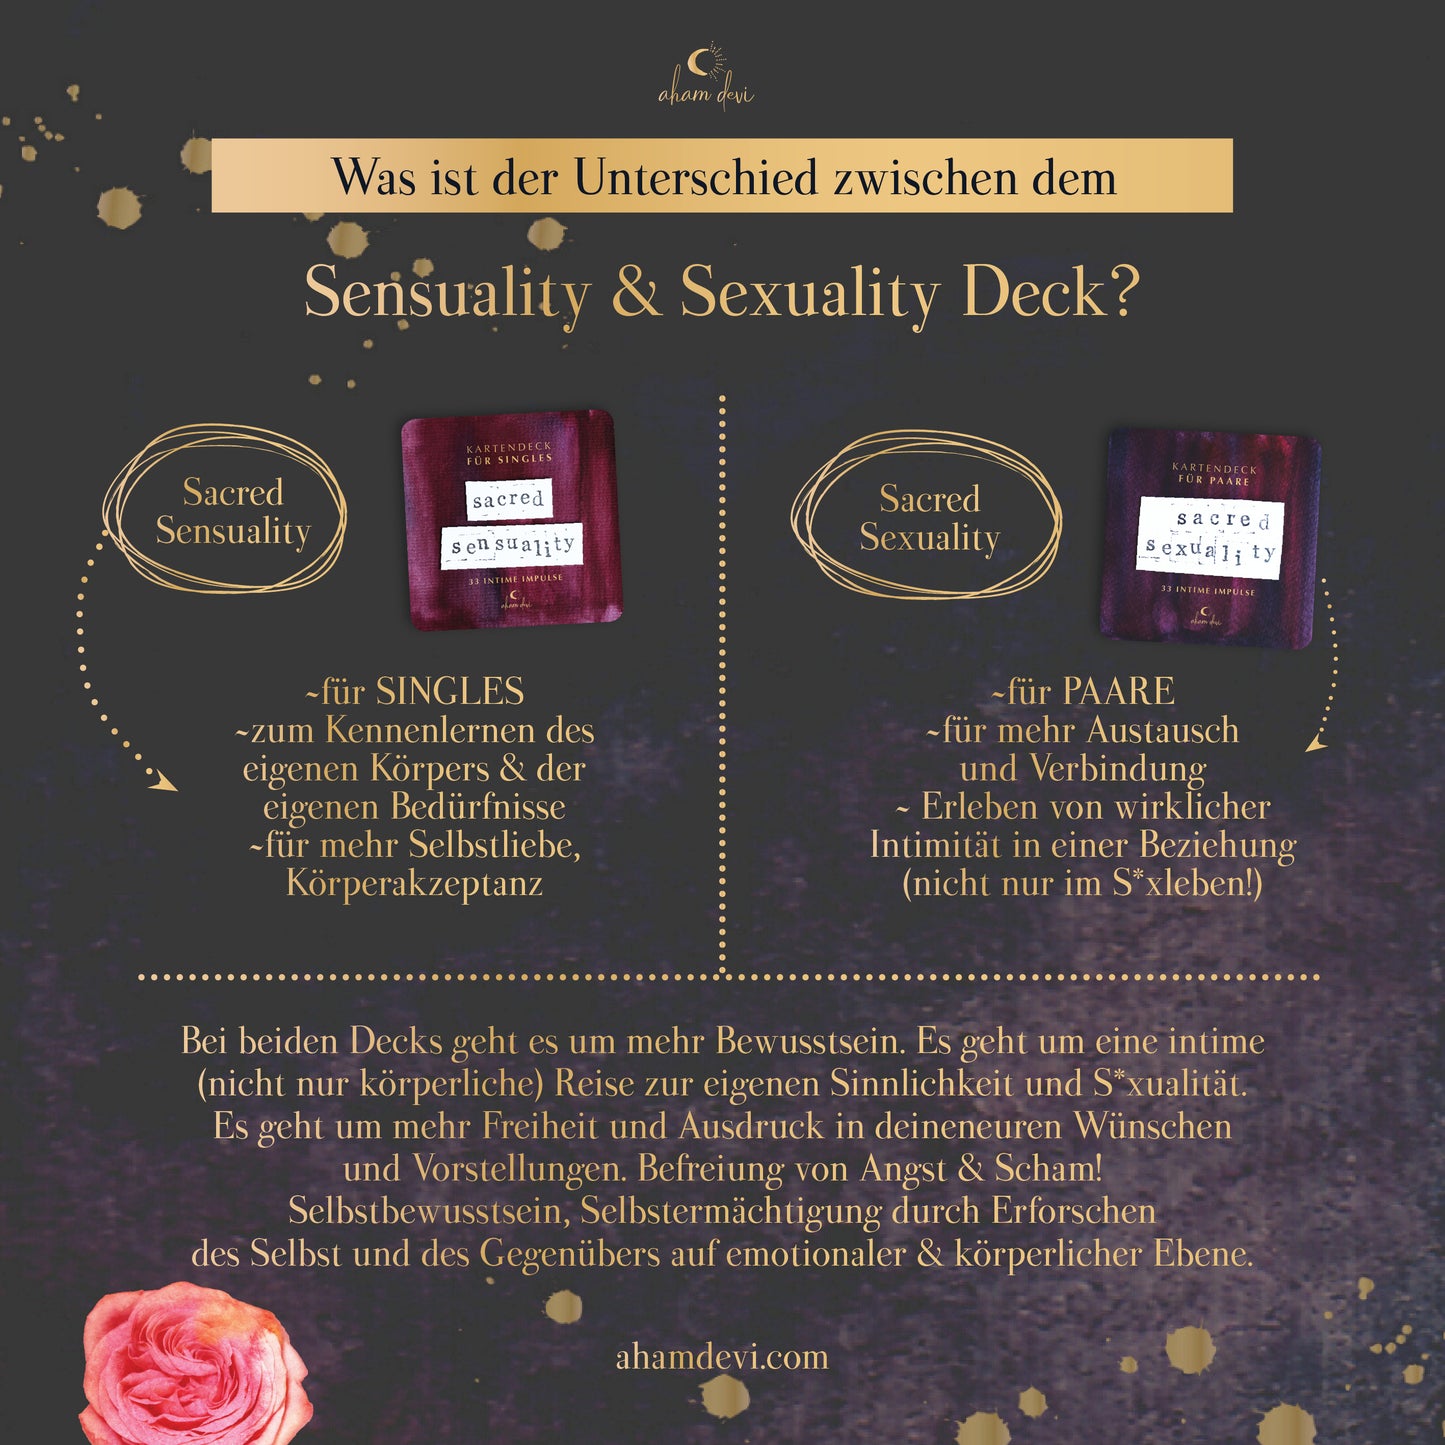 Sexuality Deck - Intime Impulse für Paare